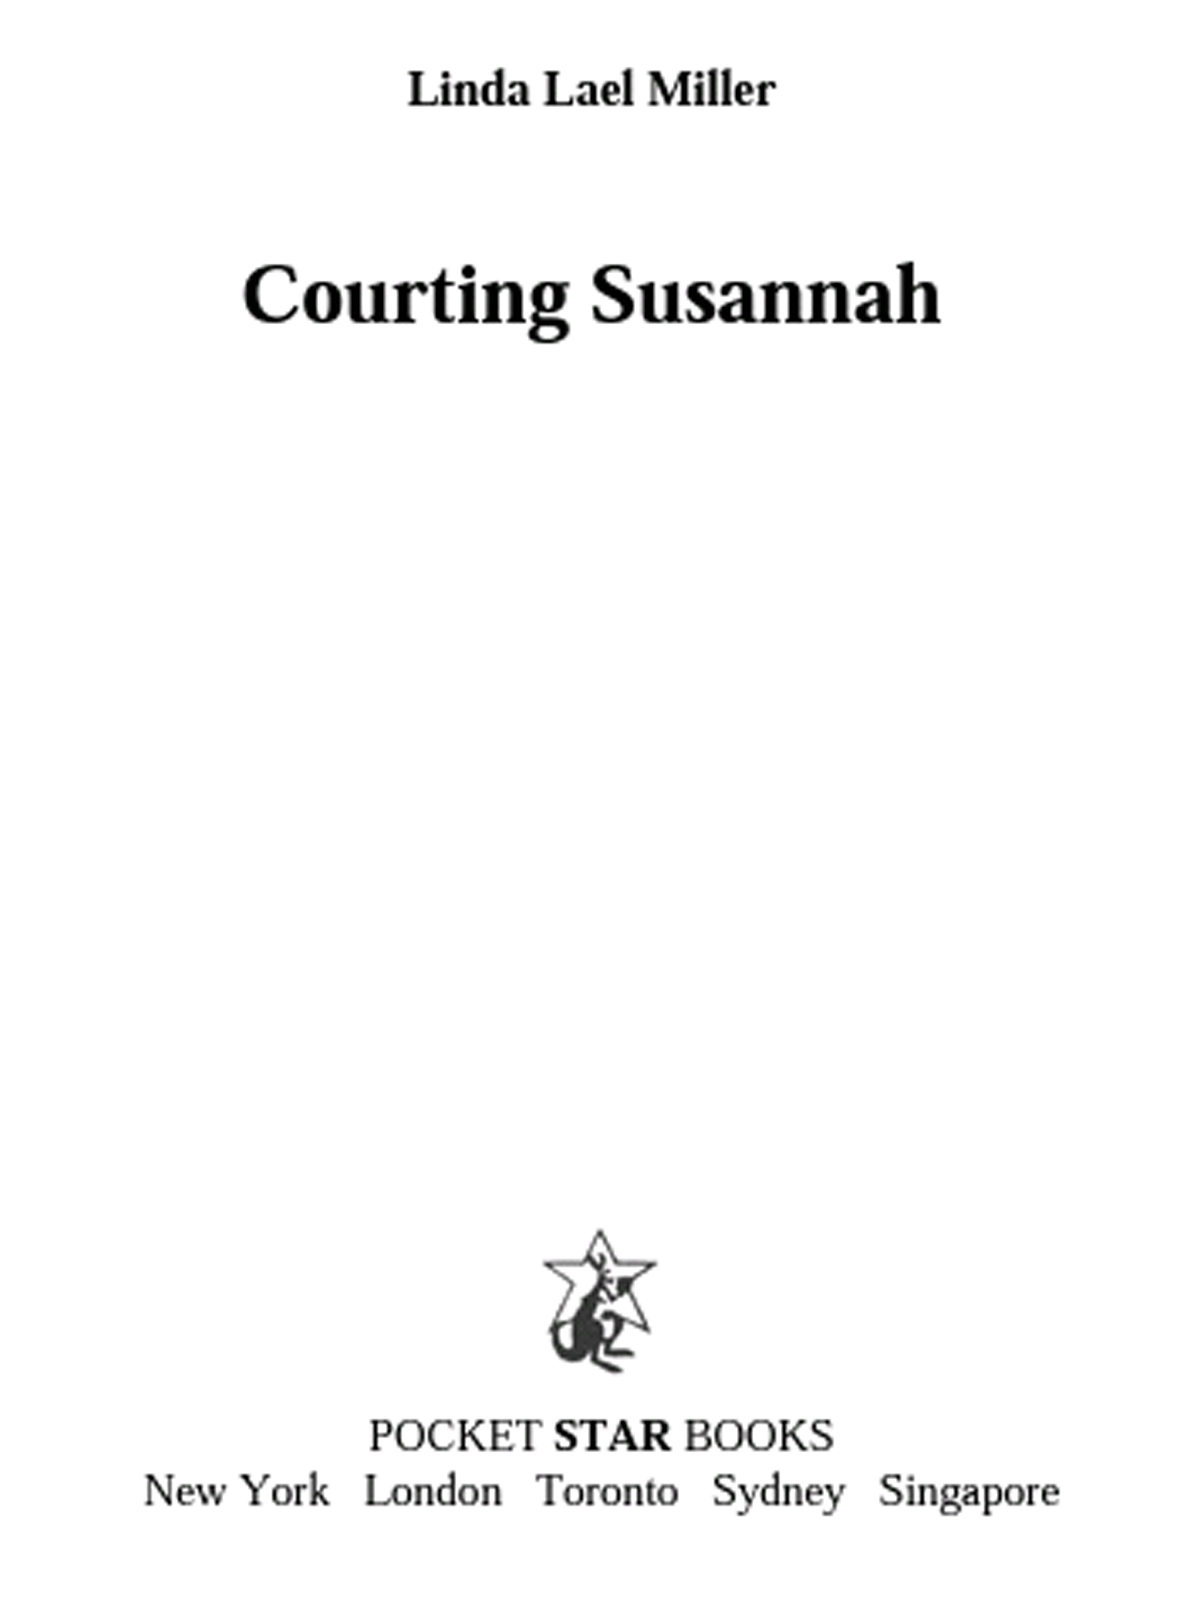 Courting Susannah (2000) by Linda Lael Miller